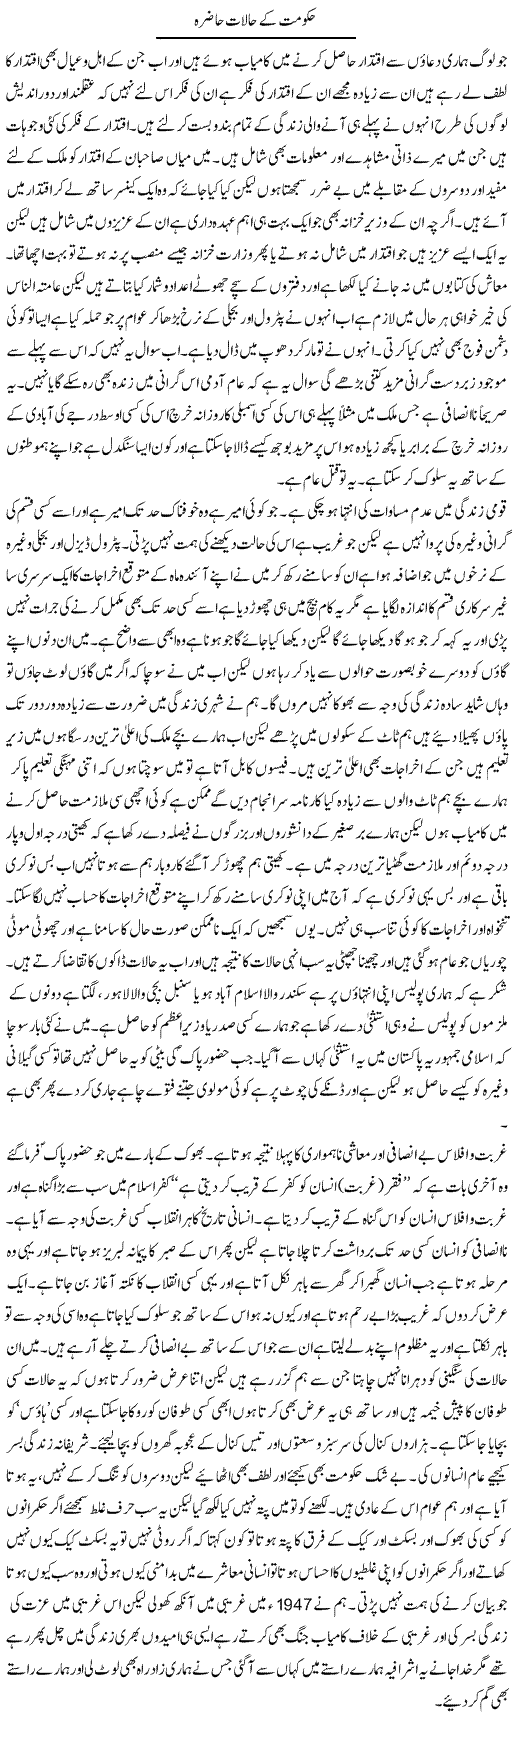 Hakoomat Kay Halaate Hazra | Abdul Qadir Hassan | Daily Urdu Columns